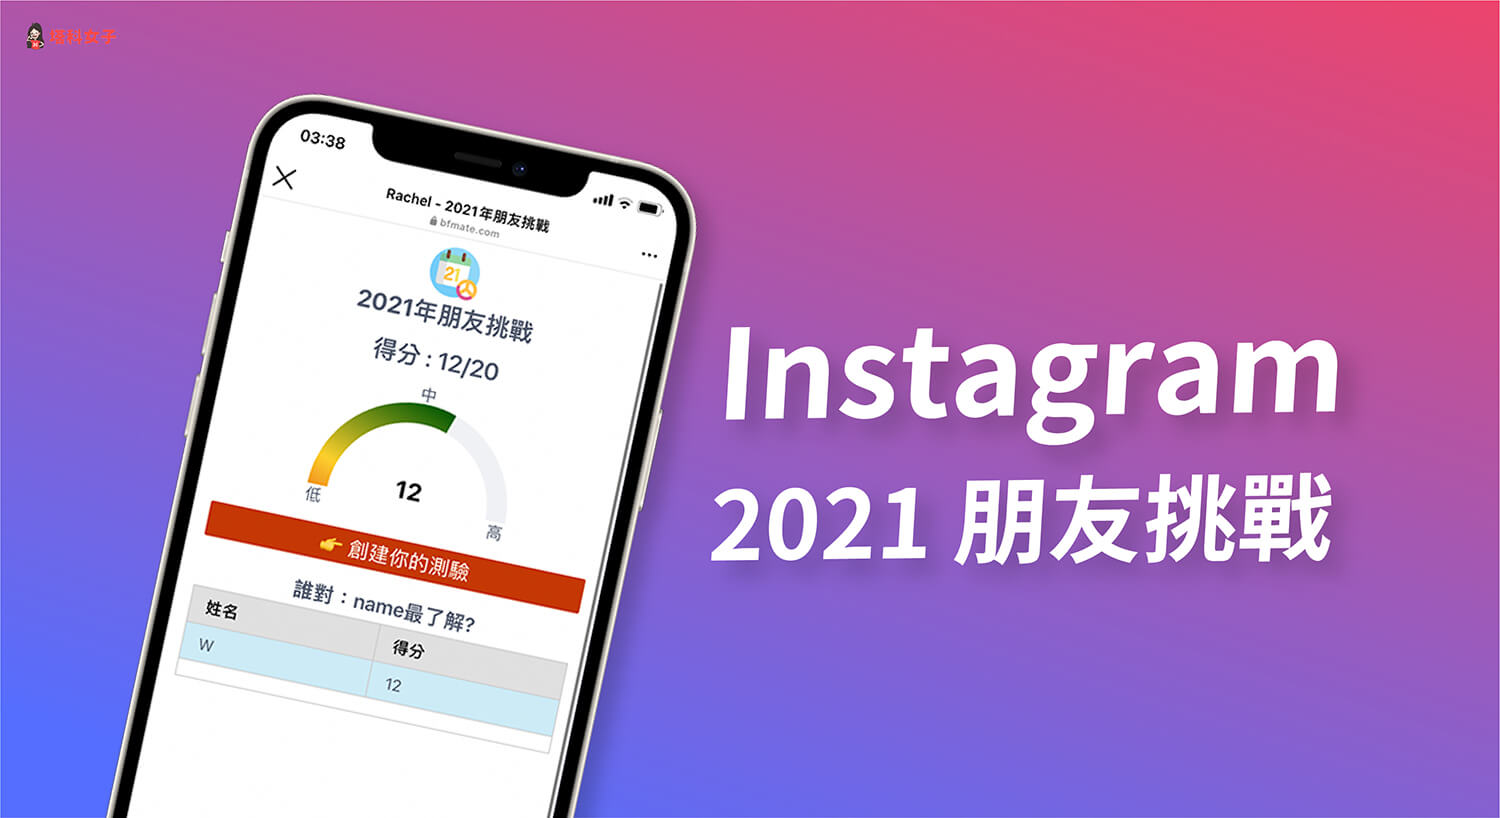 Instagram (IG) 2021 年朋友挑戰是什麼？教你製作測驗讓朋友作答